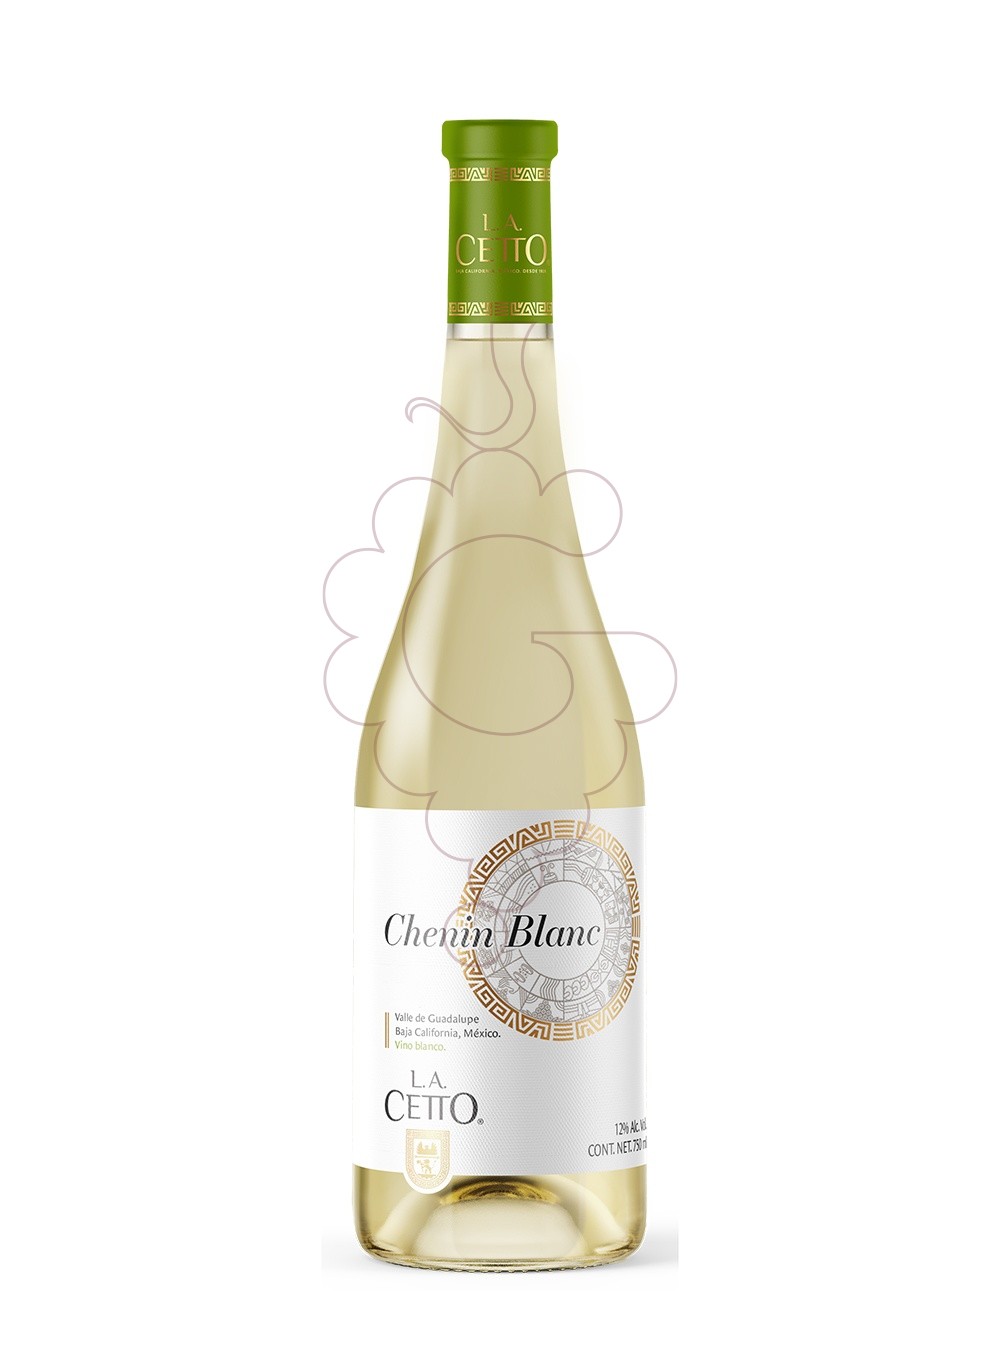 Foto LA Cetto Chenin Blanc vino blanco